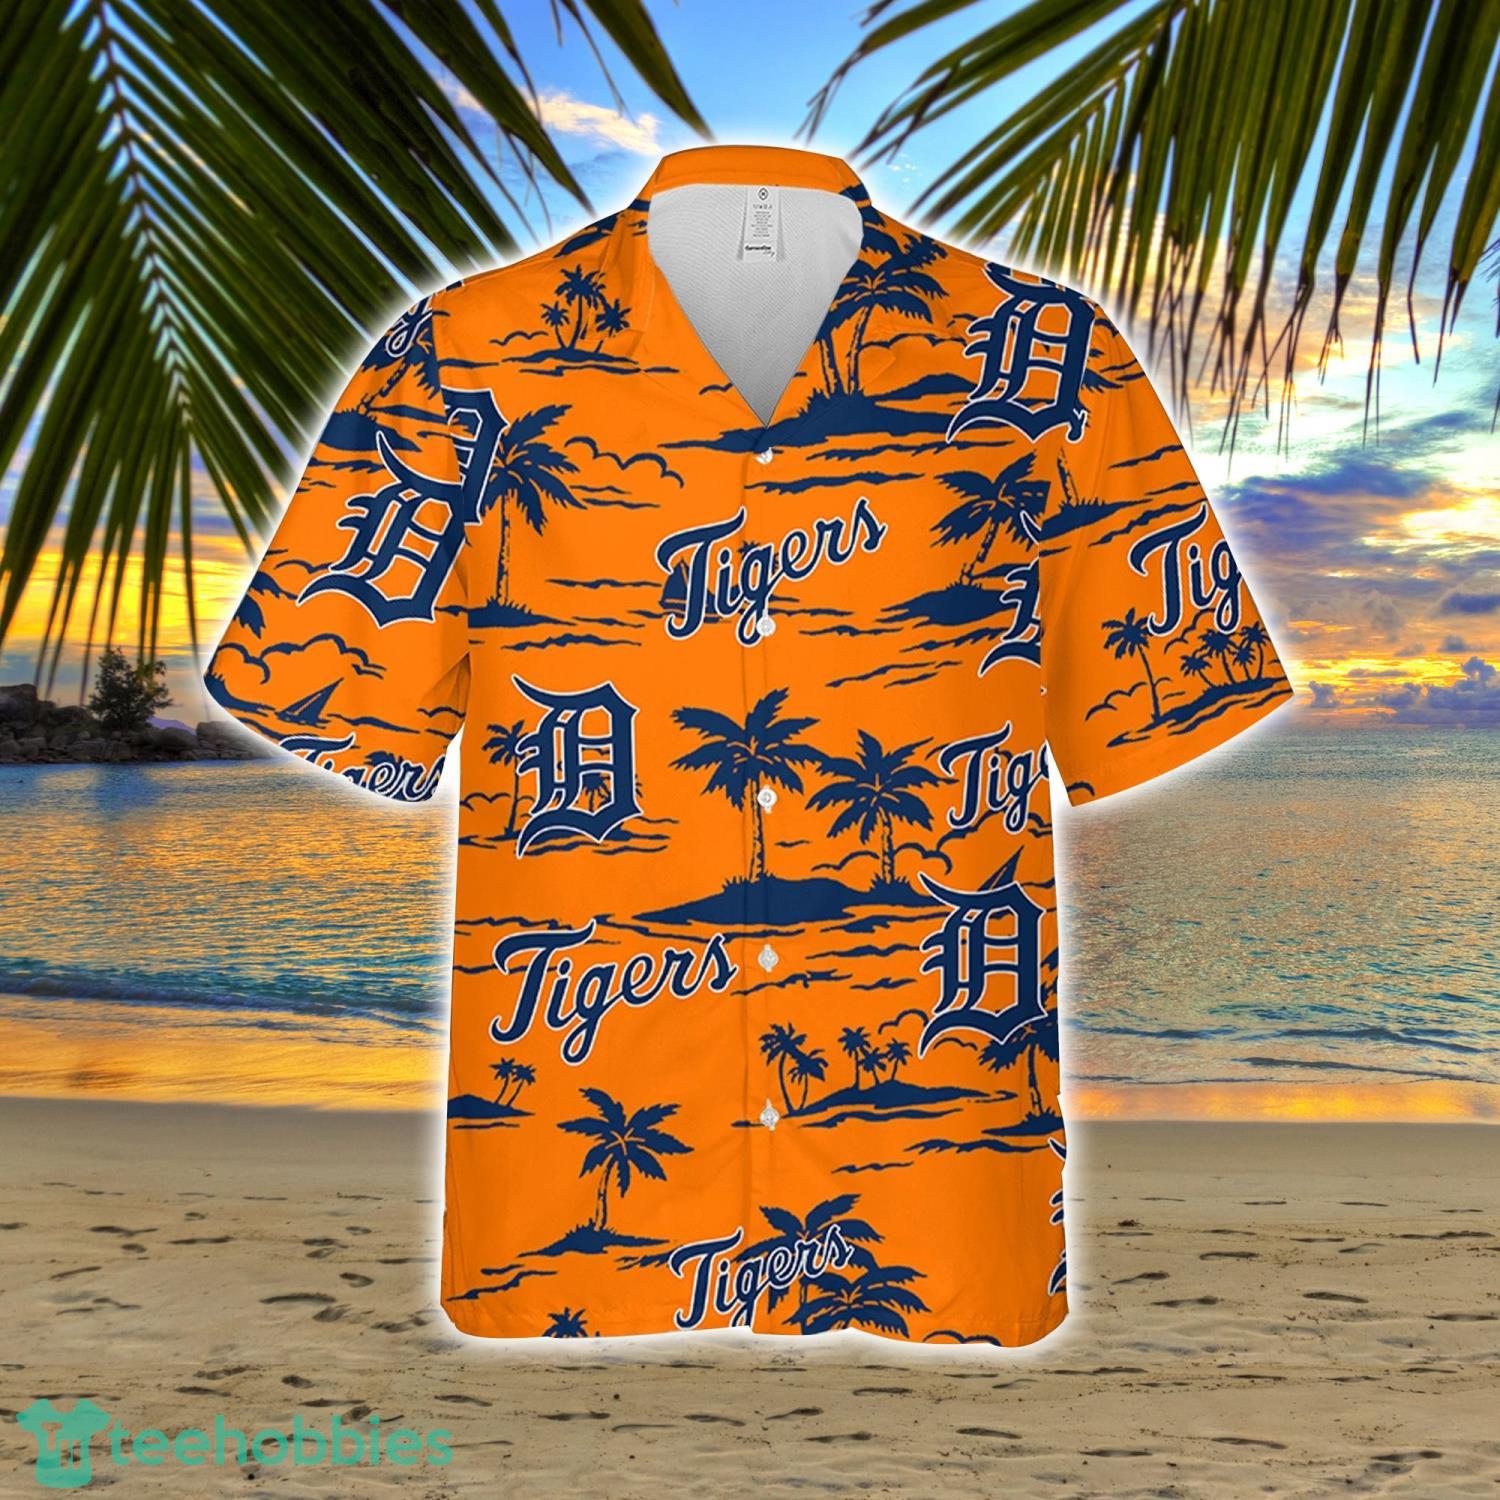 Detroit Tigers Baseball Team Navy Hawaiian Shirts